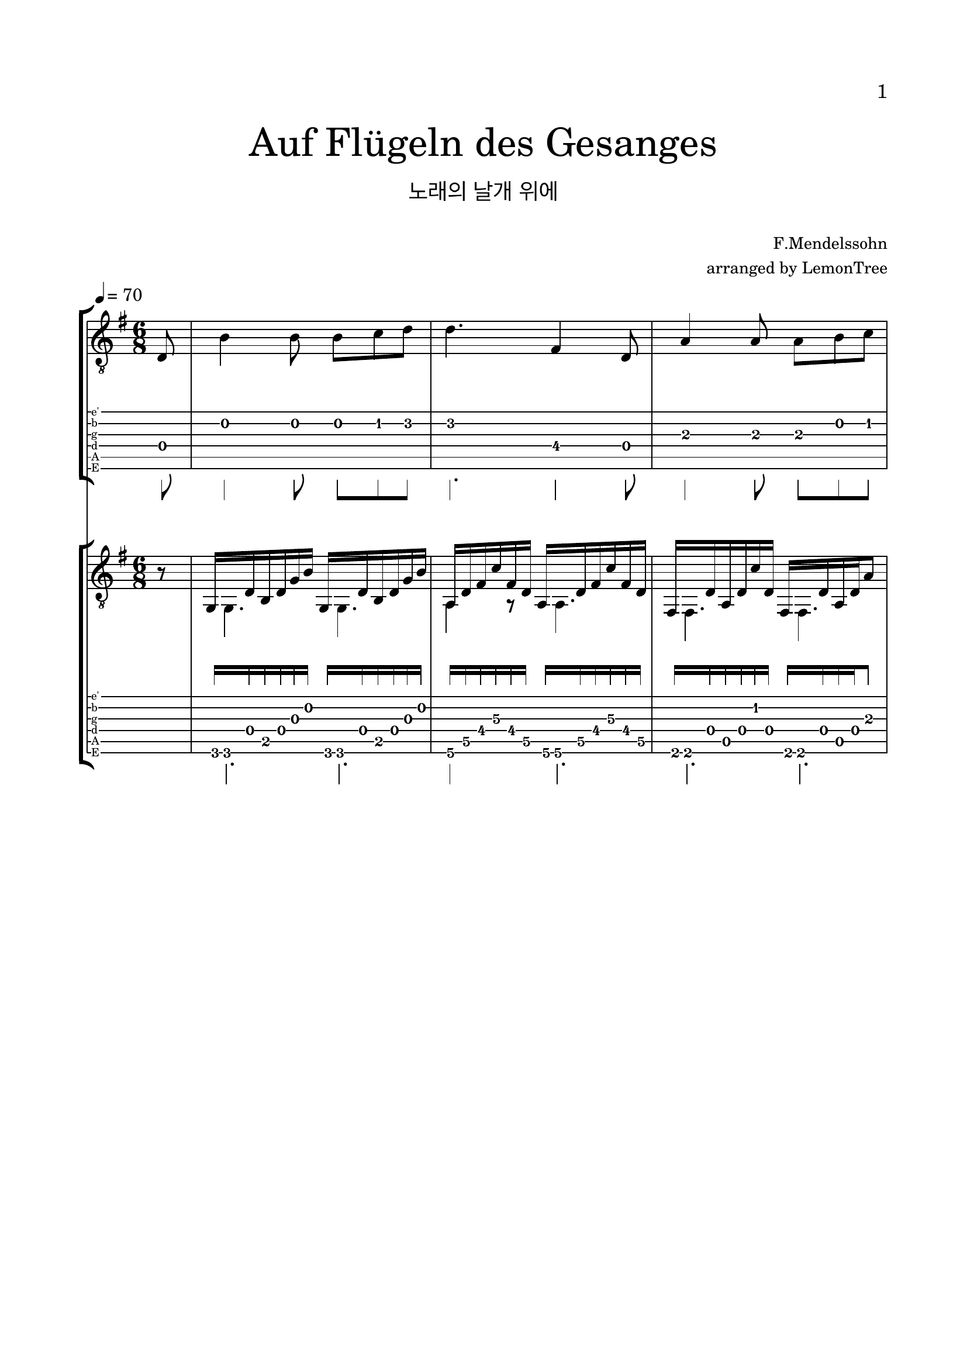 Felix Mendelssohn - Auf Flügeln des Gesanges by LemonTree